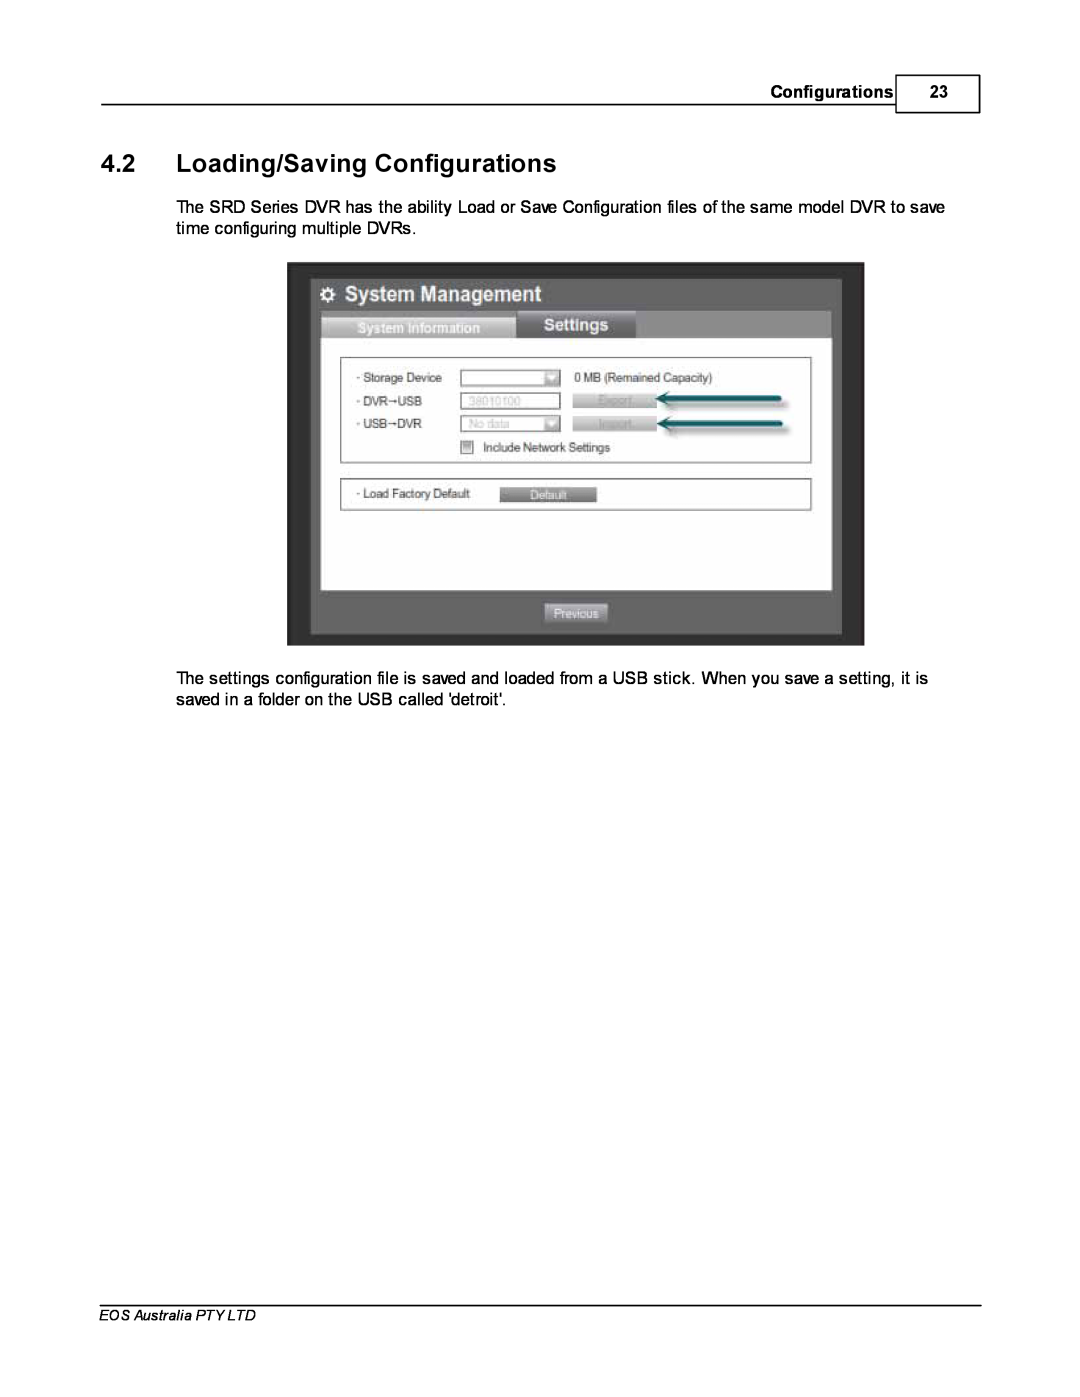 Samsung SDR4200 manual 4.2Loading/Saving Configurations 